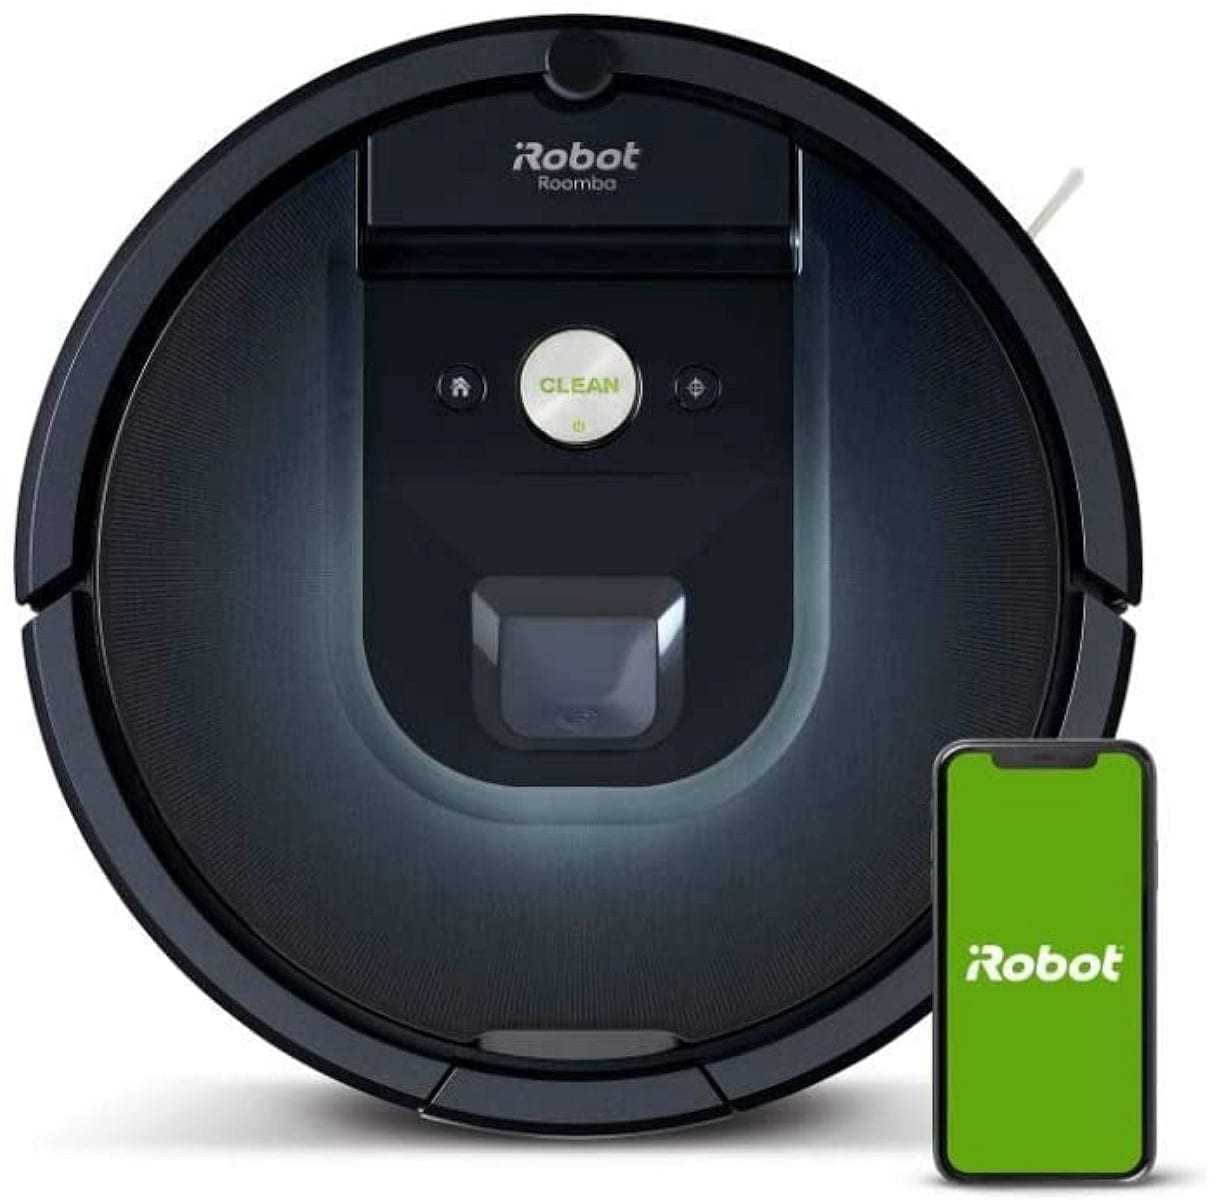 iRobot Roomba 981 Schnäppchen Black Friday Amazon 400 Euro 43 Prozent sparen